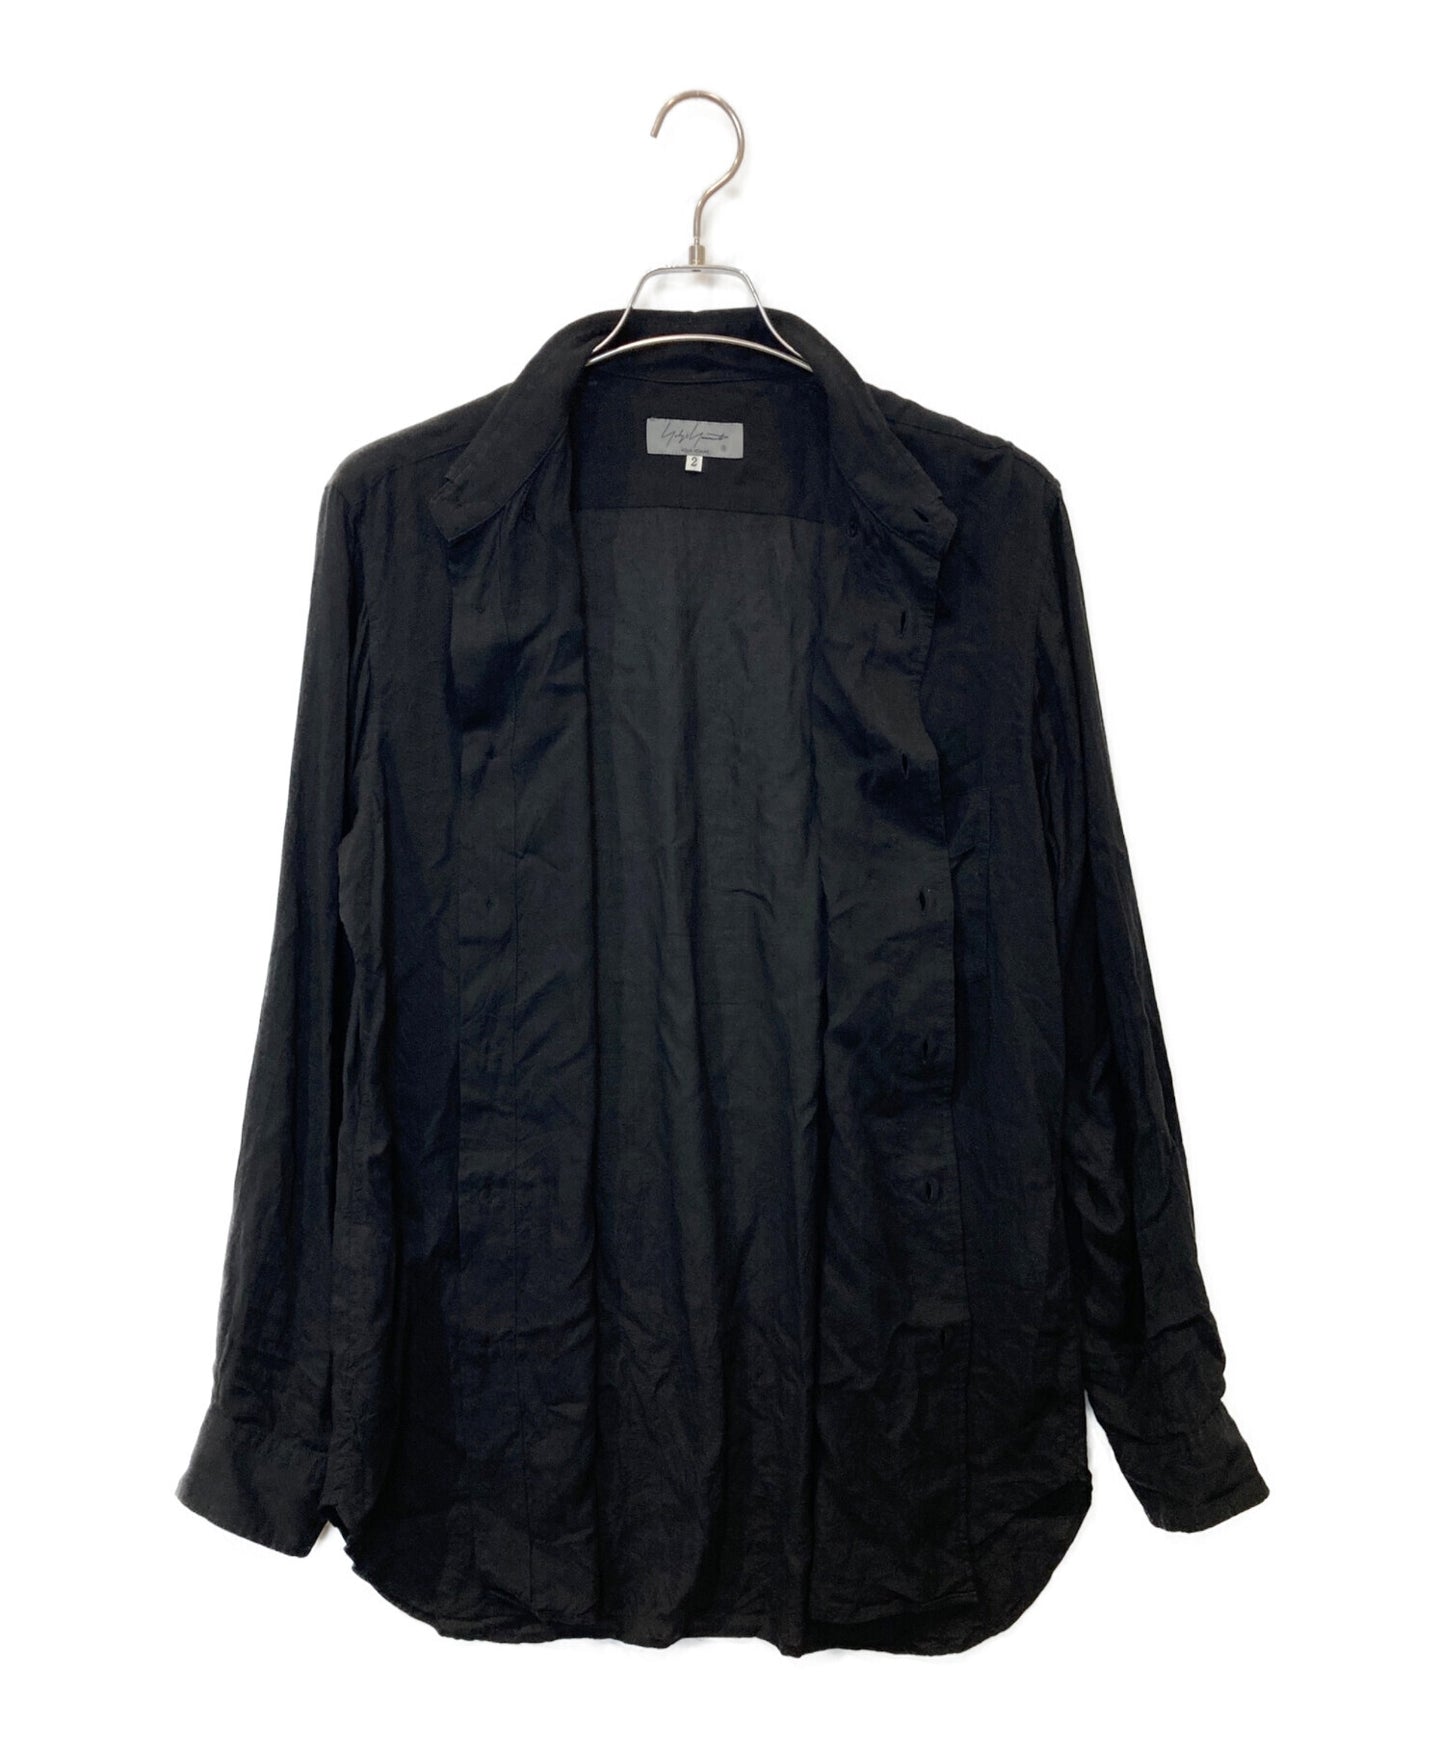 Yohji Yamamoto Pour homme襯衫，帶環帶HX-B16-201